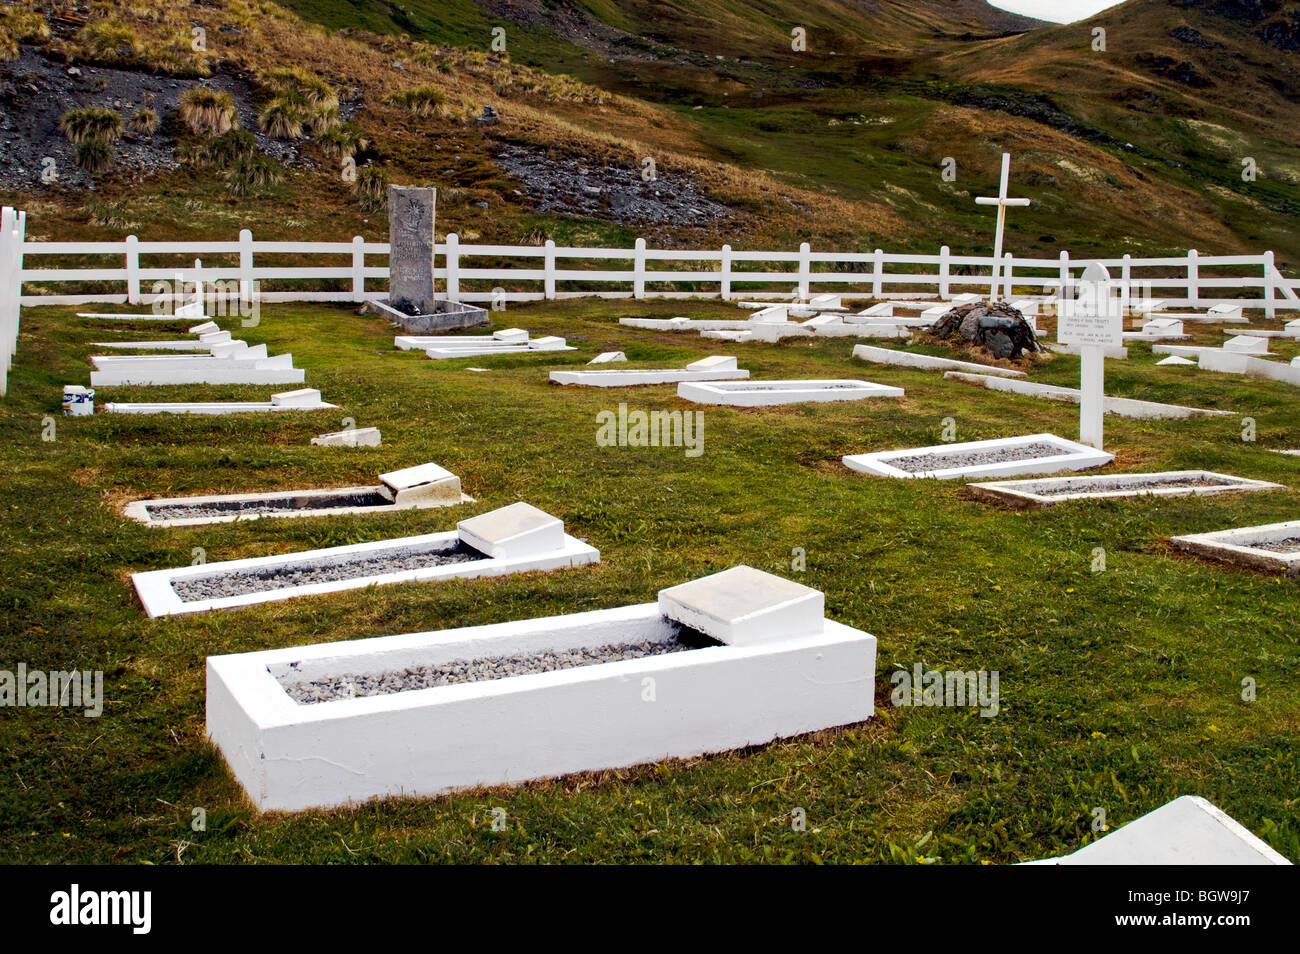 Old whaler's graveyard in Grytviken, South Georgia. Famed explorer Sir Ernest Shackleton's grave is in center background. Stock Photo